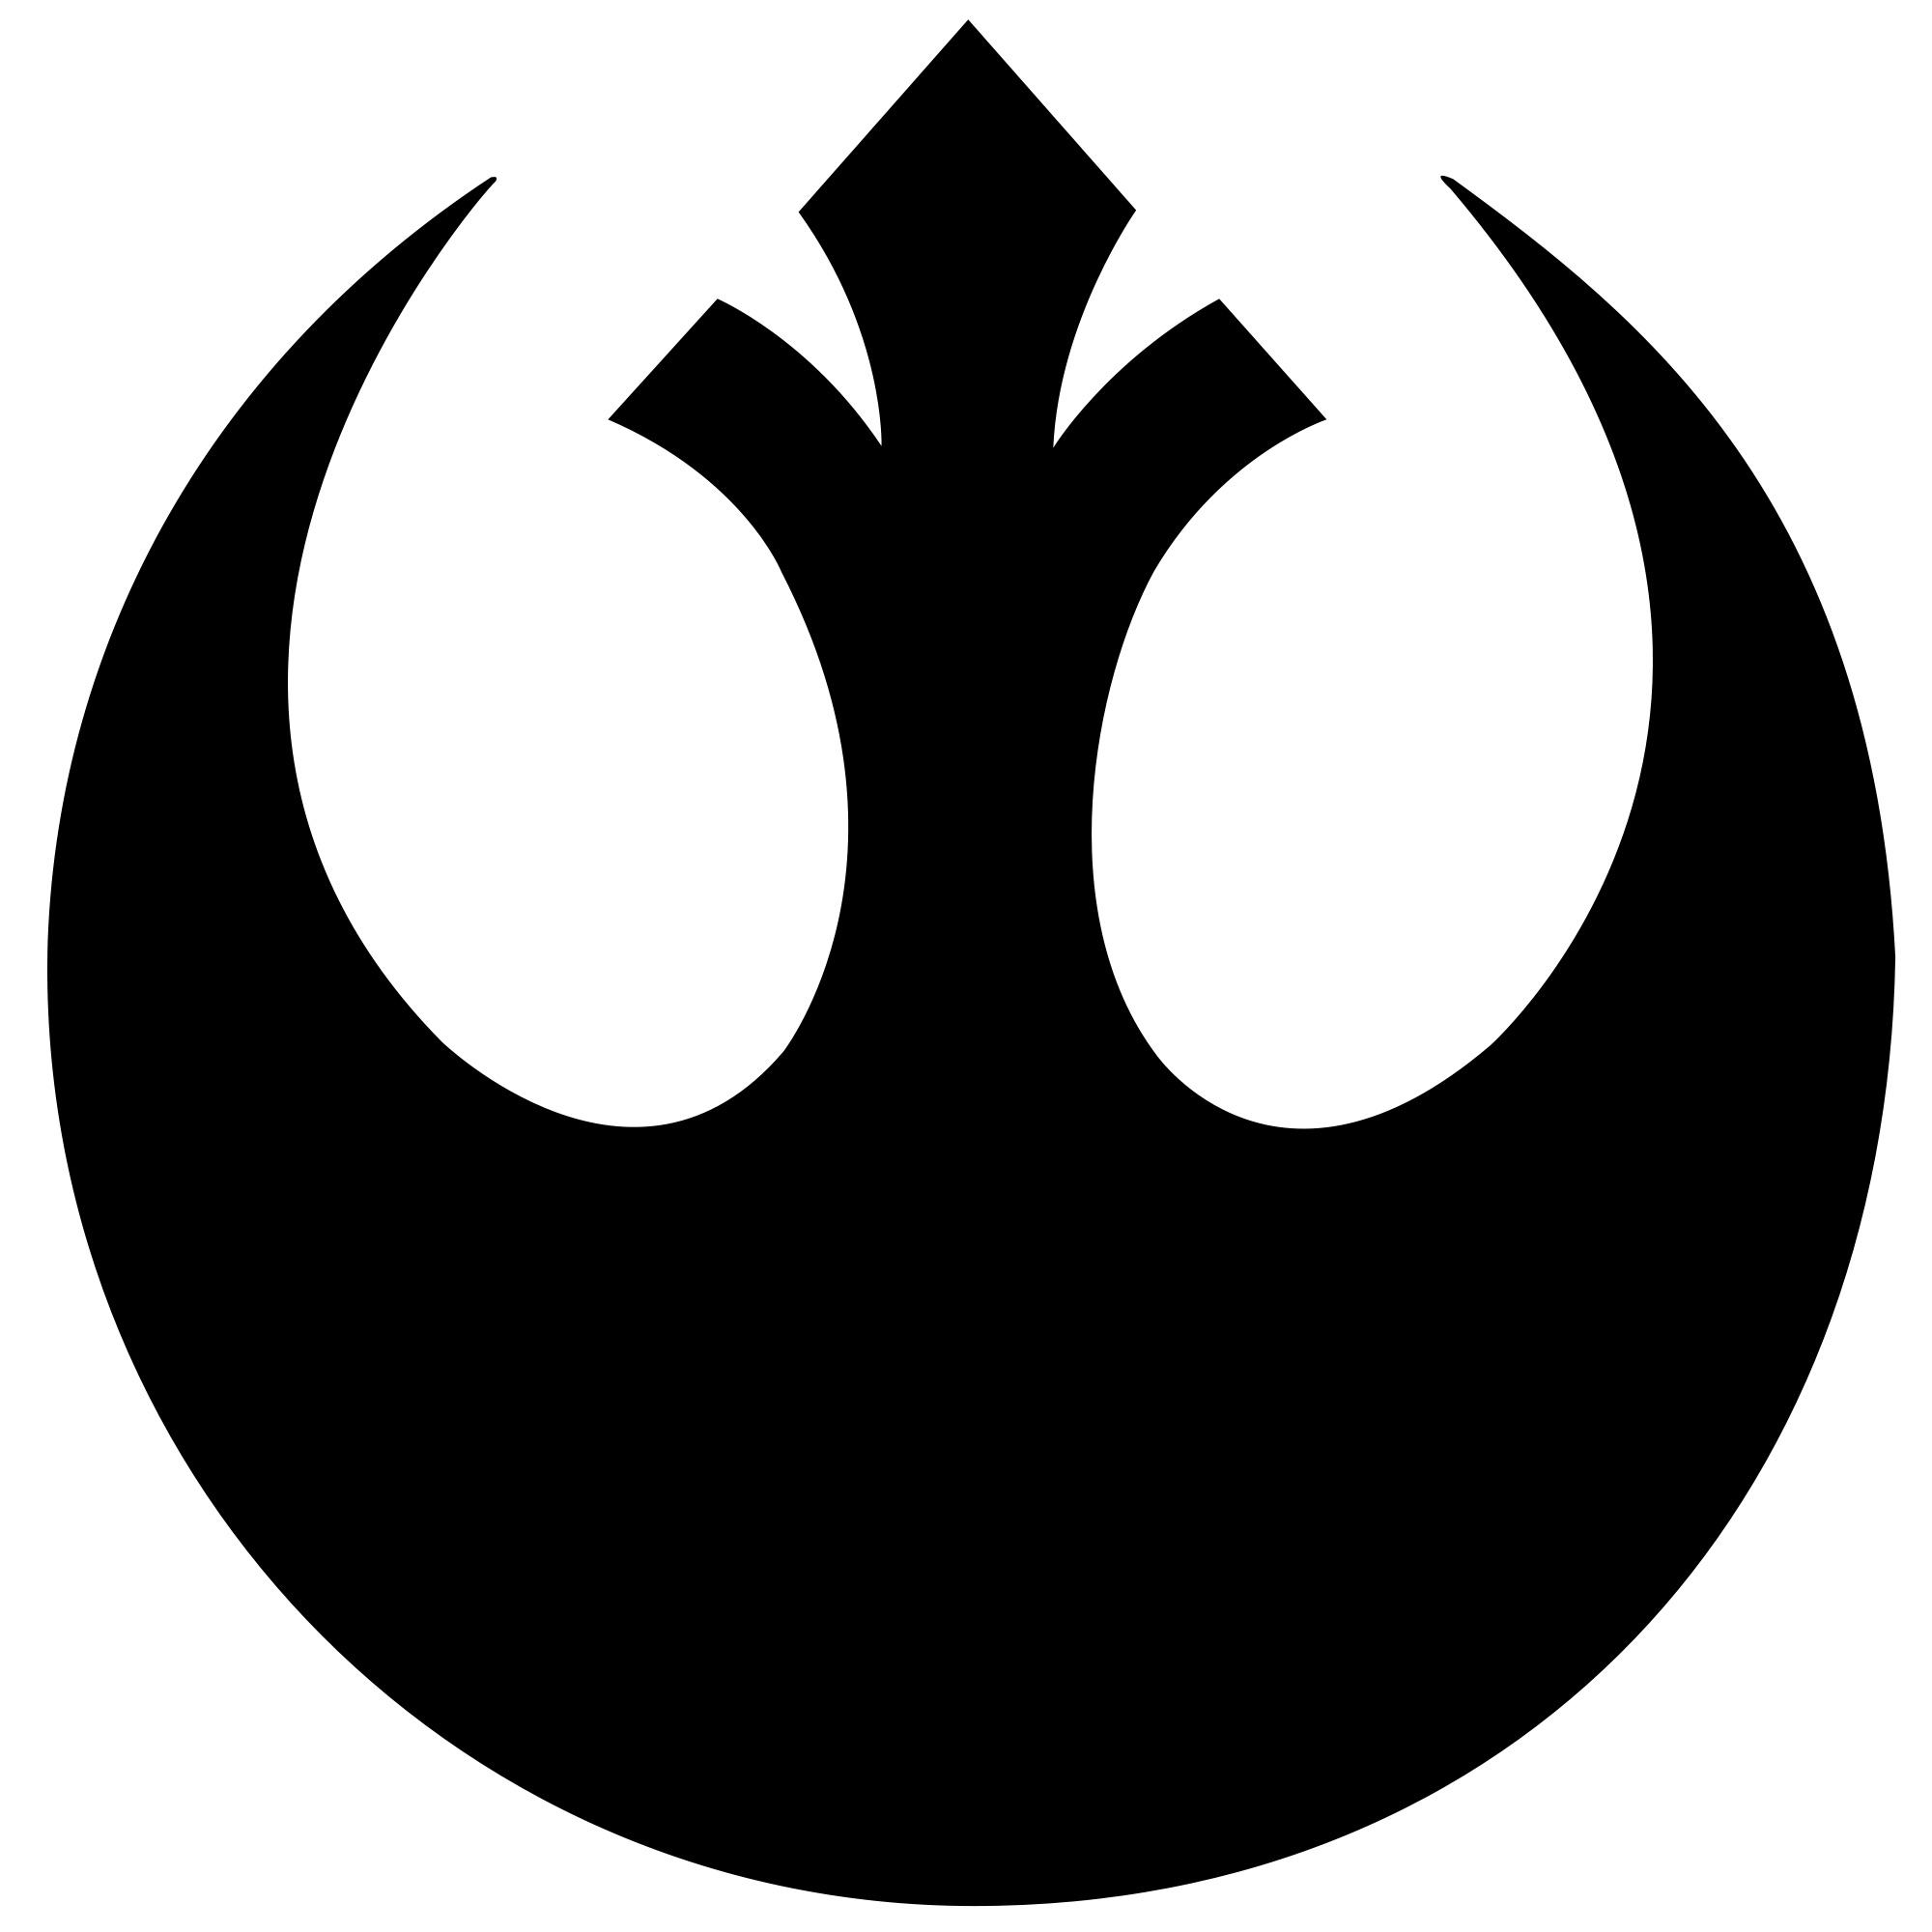 File:Starwars 2013 Emote Rebel Alliance.png - Wikimedia Commons